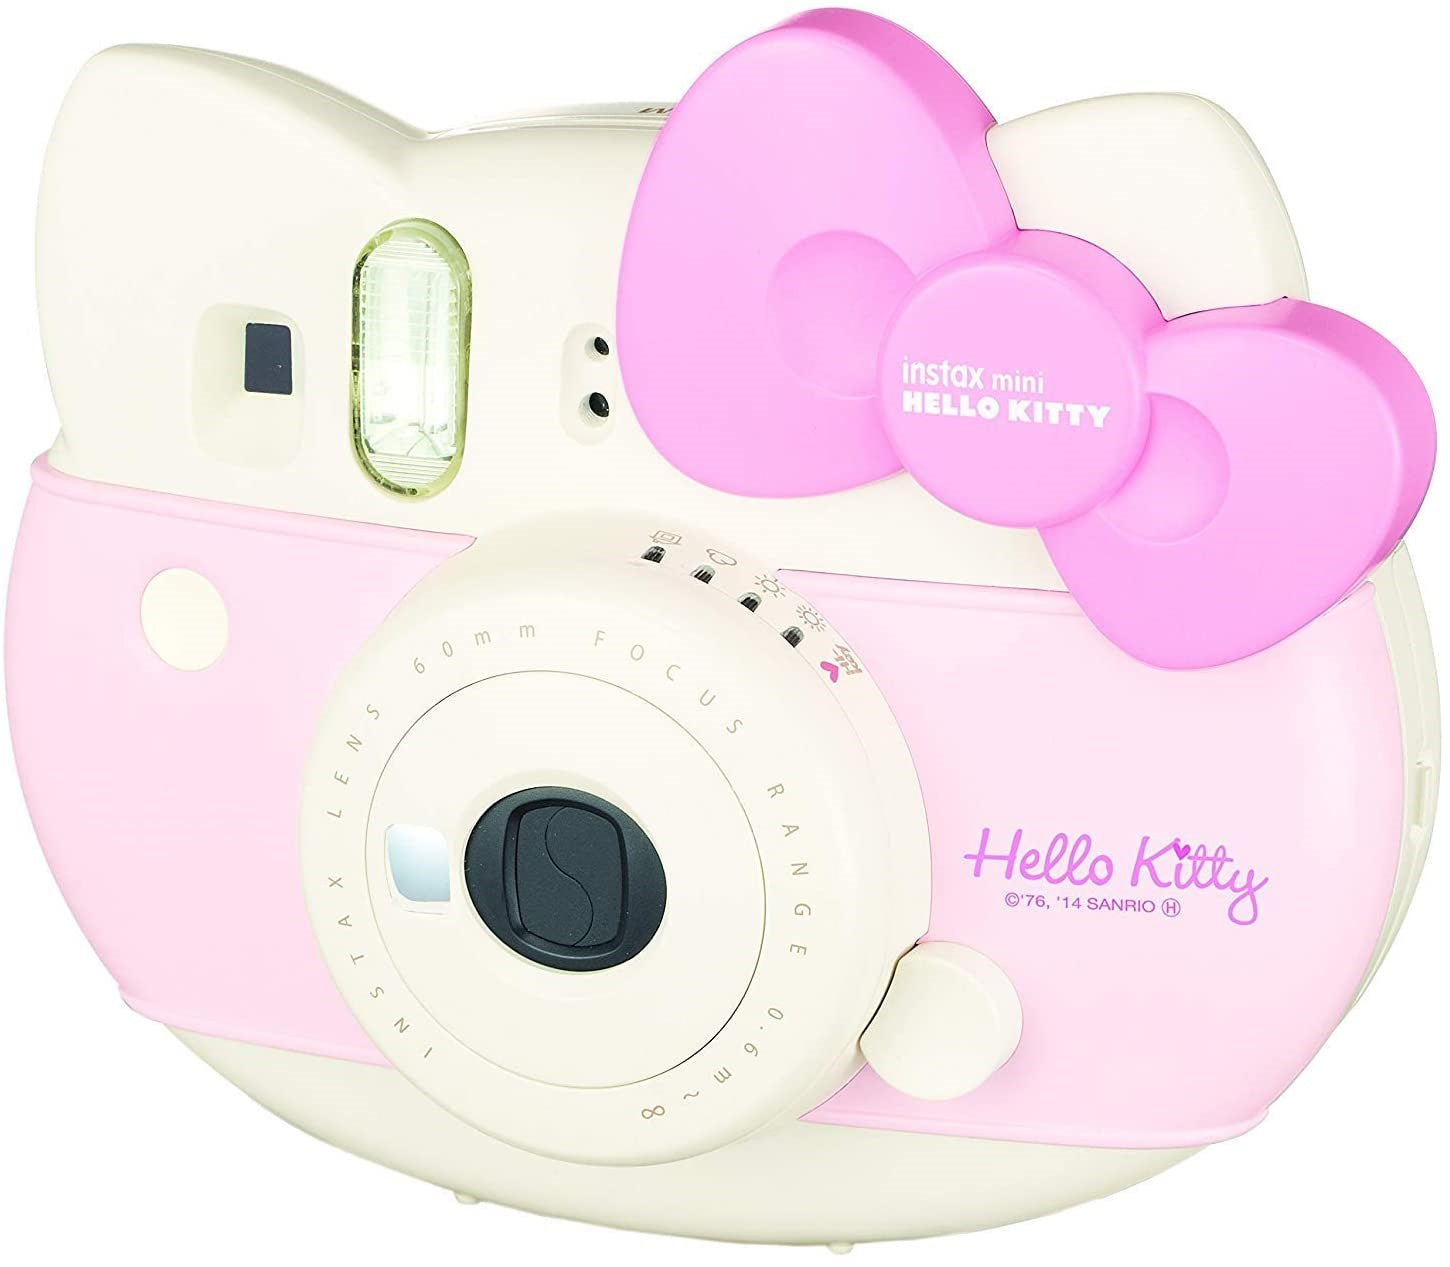 Fujifilm Instax Mini Hello Kitty Limited Edition Instant Camera